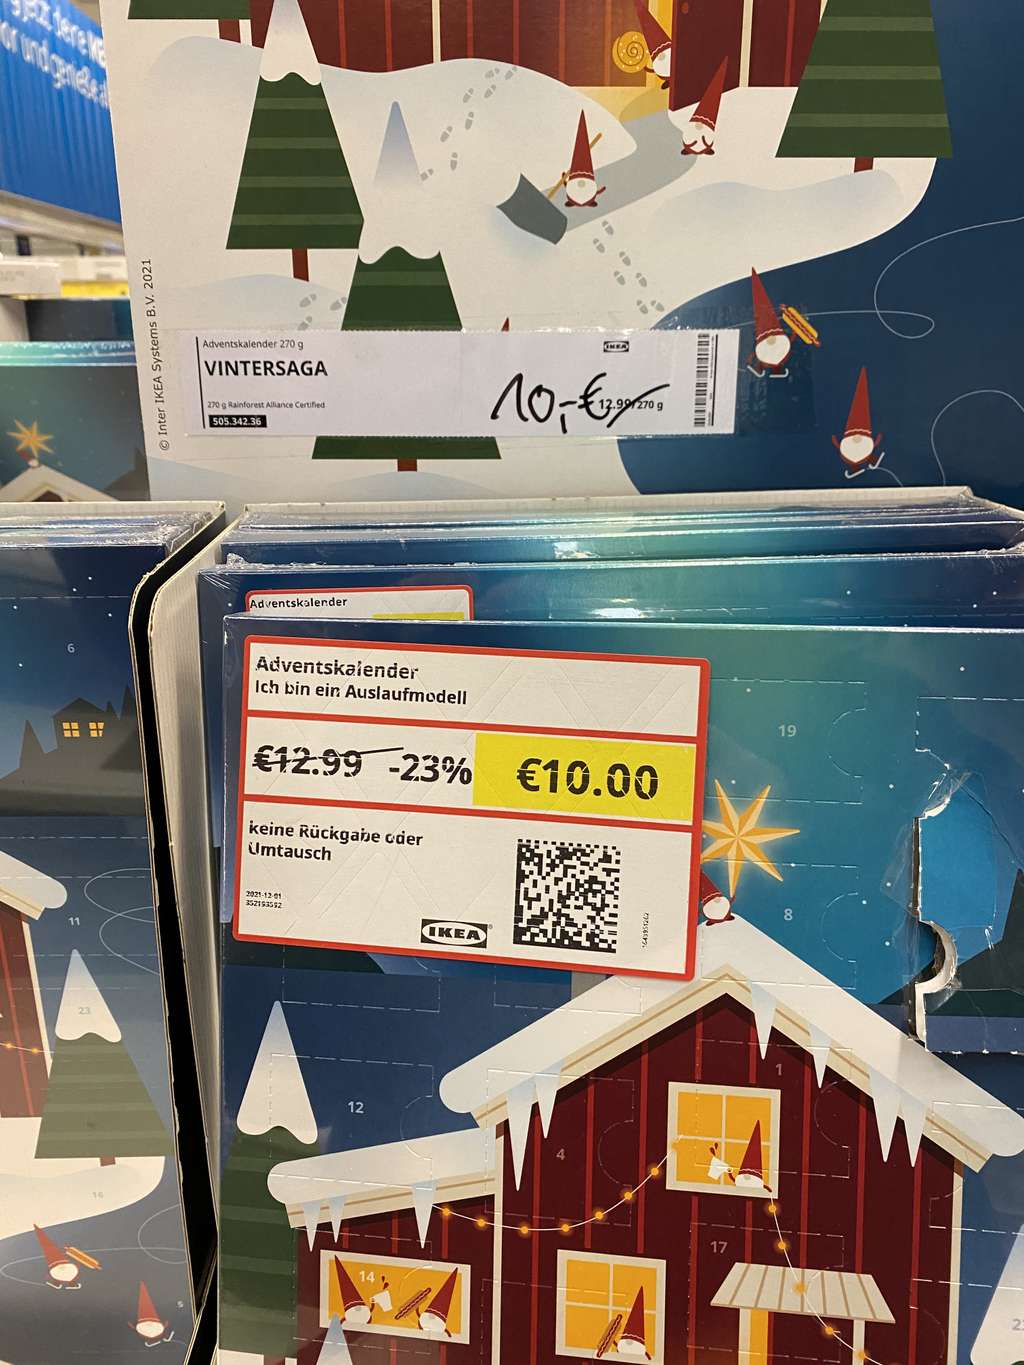 [lokal ] [ikea] Adventskalender für 10€ statt 12,99€ im Ikea Kiel